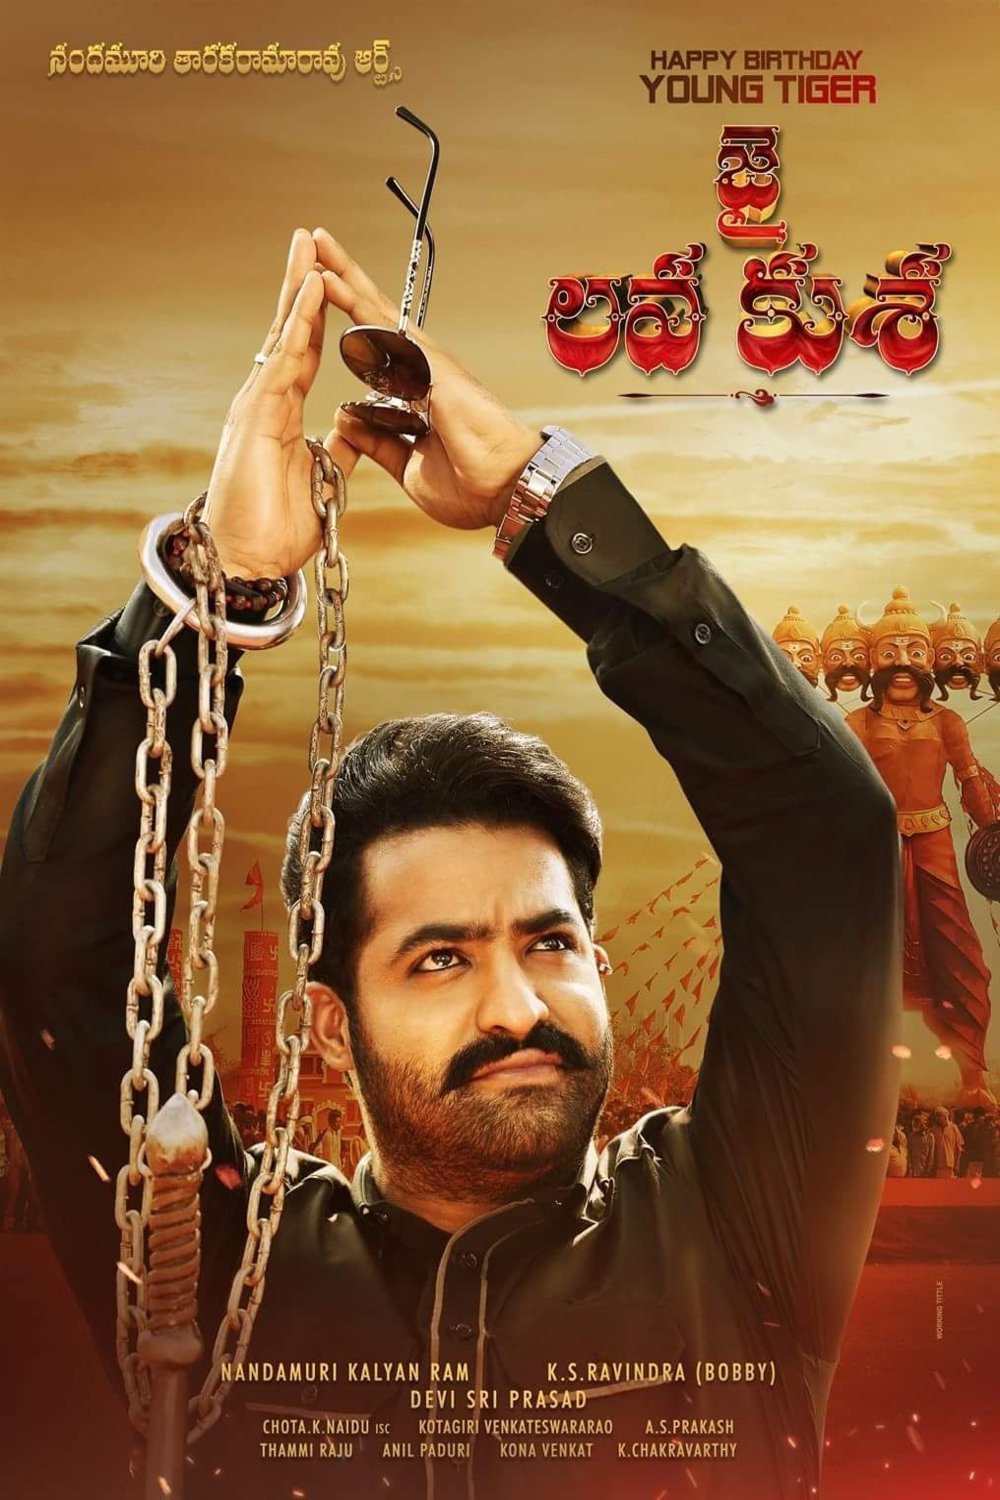 Poster of the movie Jai Lava Kusa